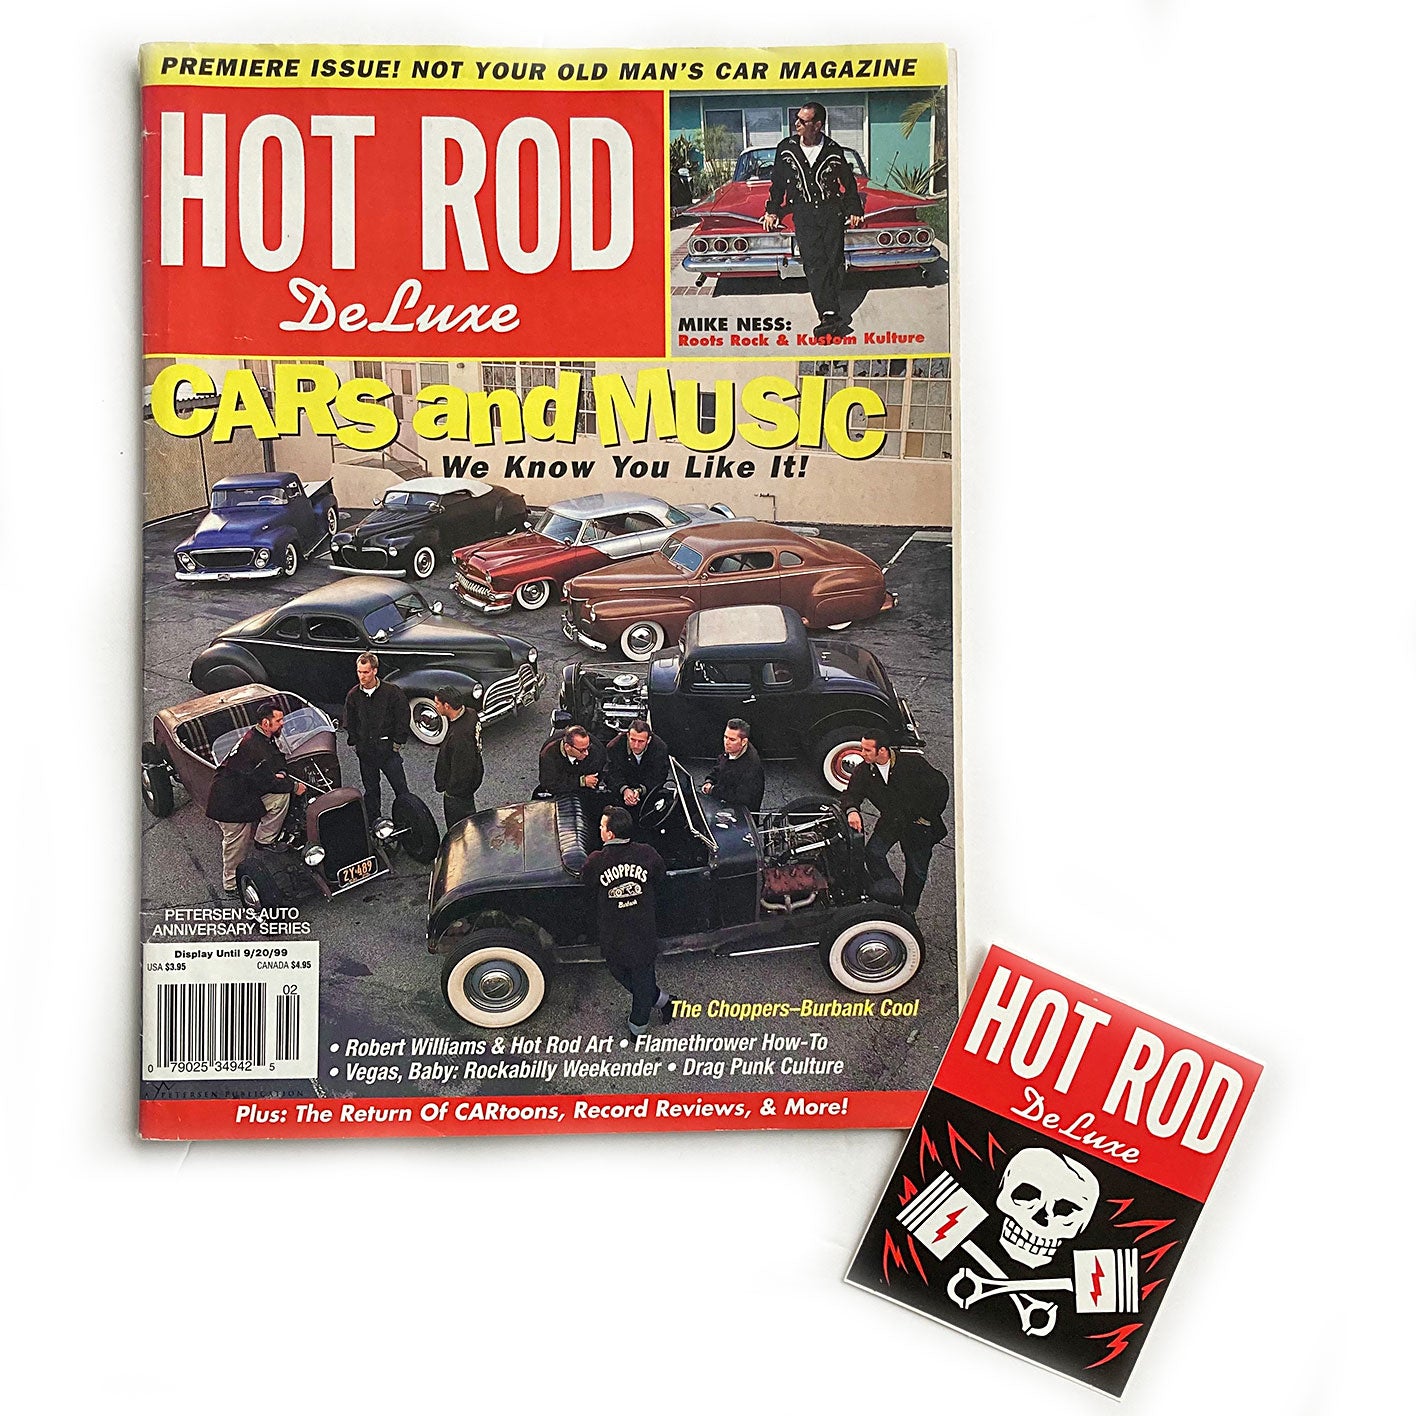 Hot Rod Deluxe magazine issue 1 with original sticker, 1999